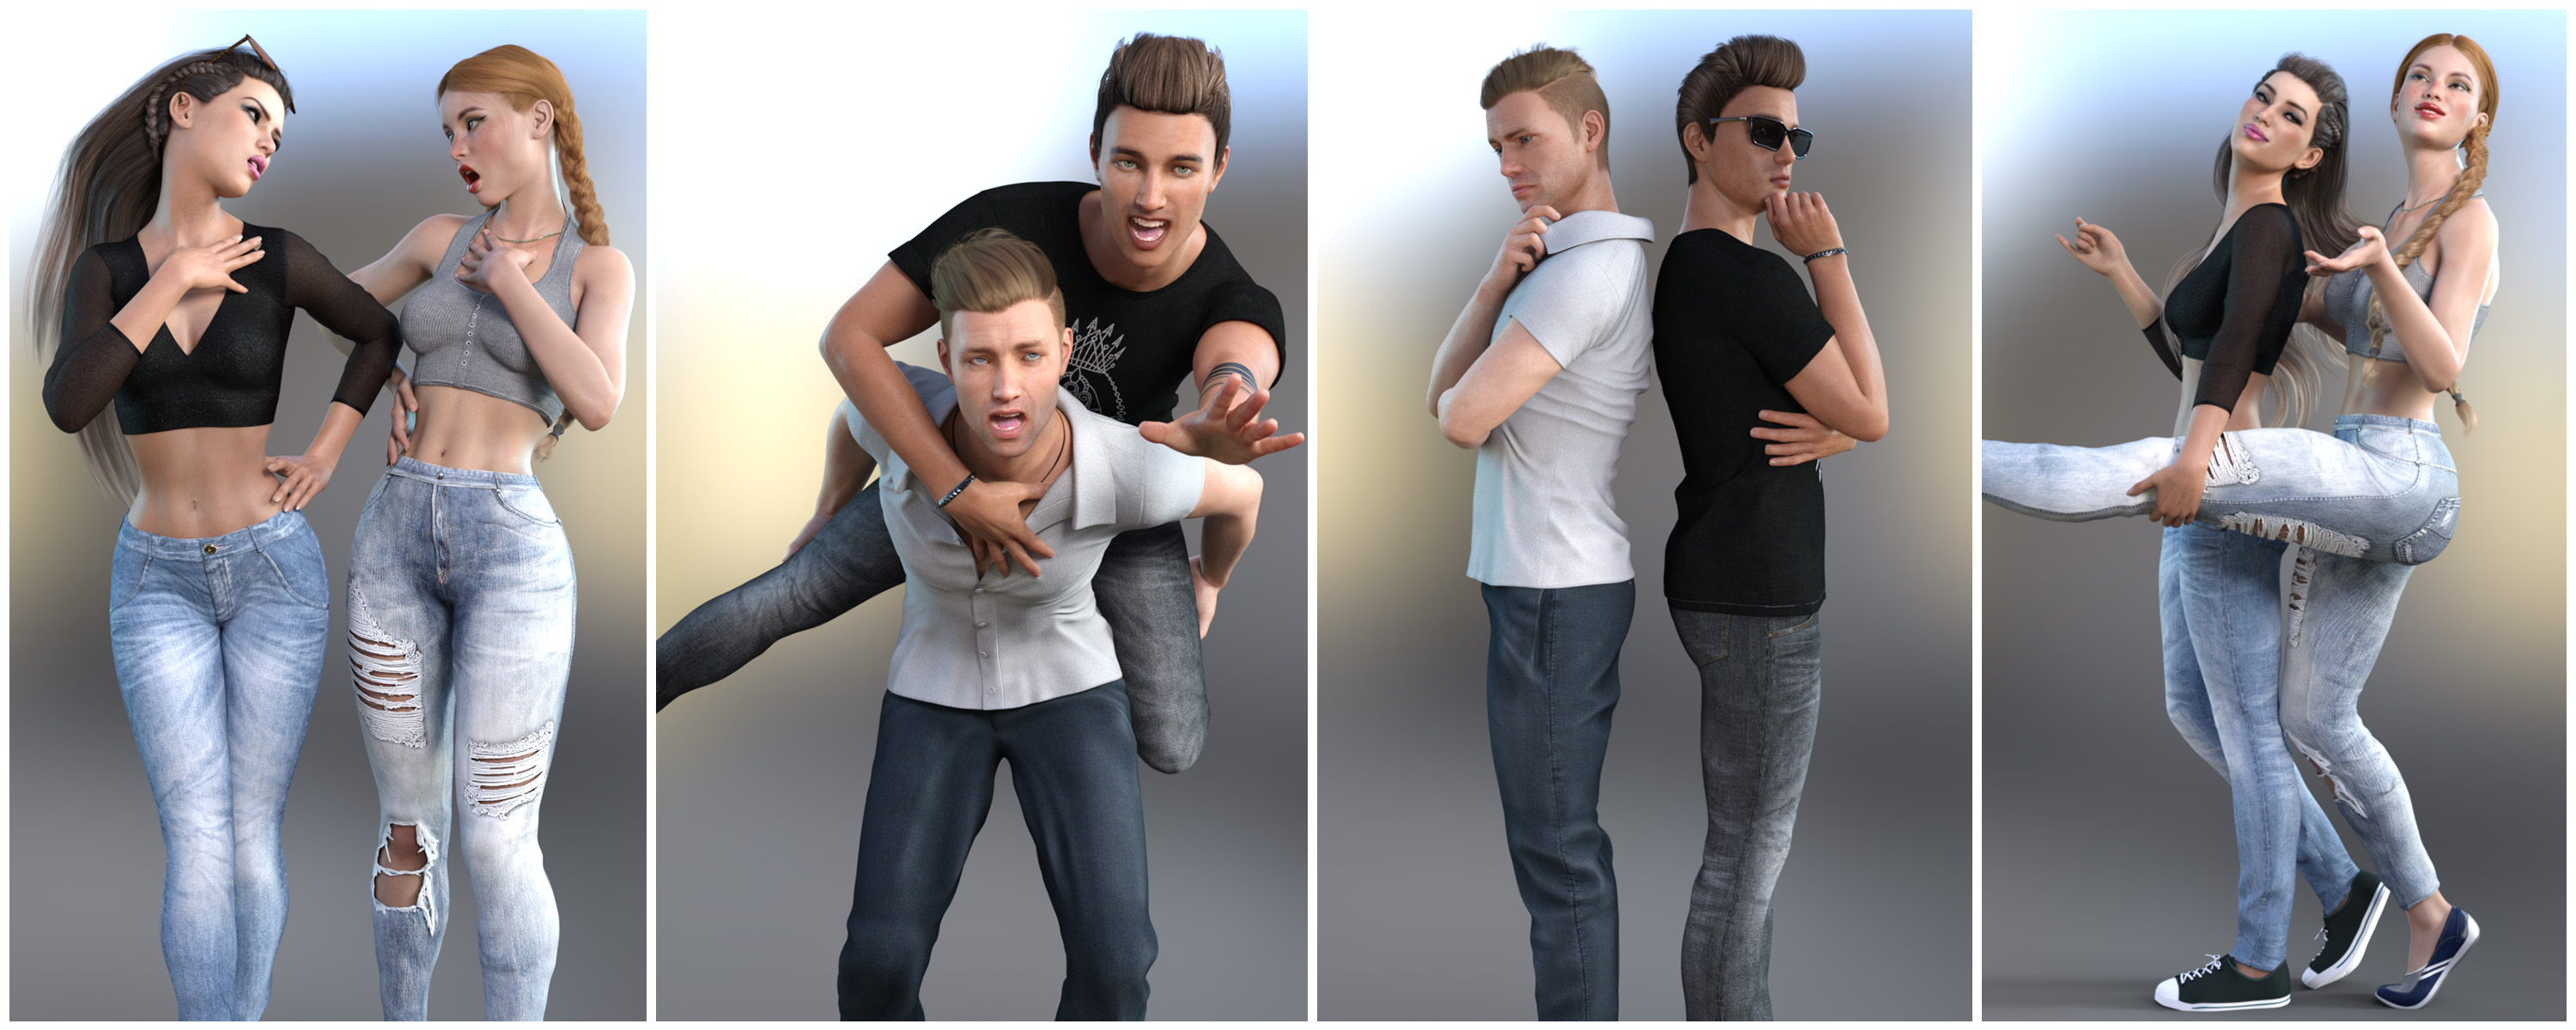 Z Best Friends - Couple Poses for Genesis 3 and 8 by: Zeddicuss, 3D Models by Daz 3D